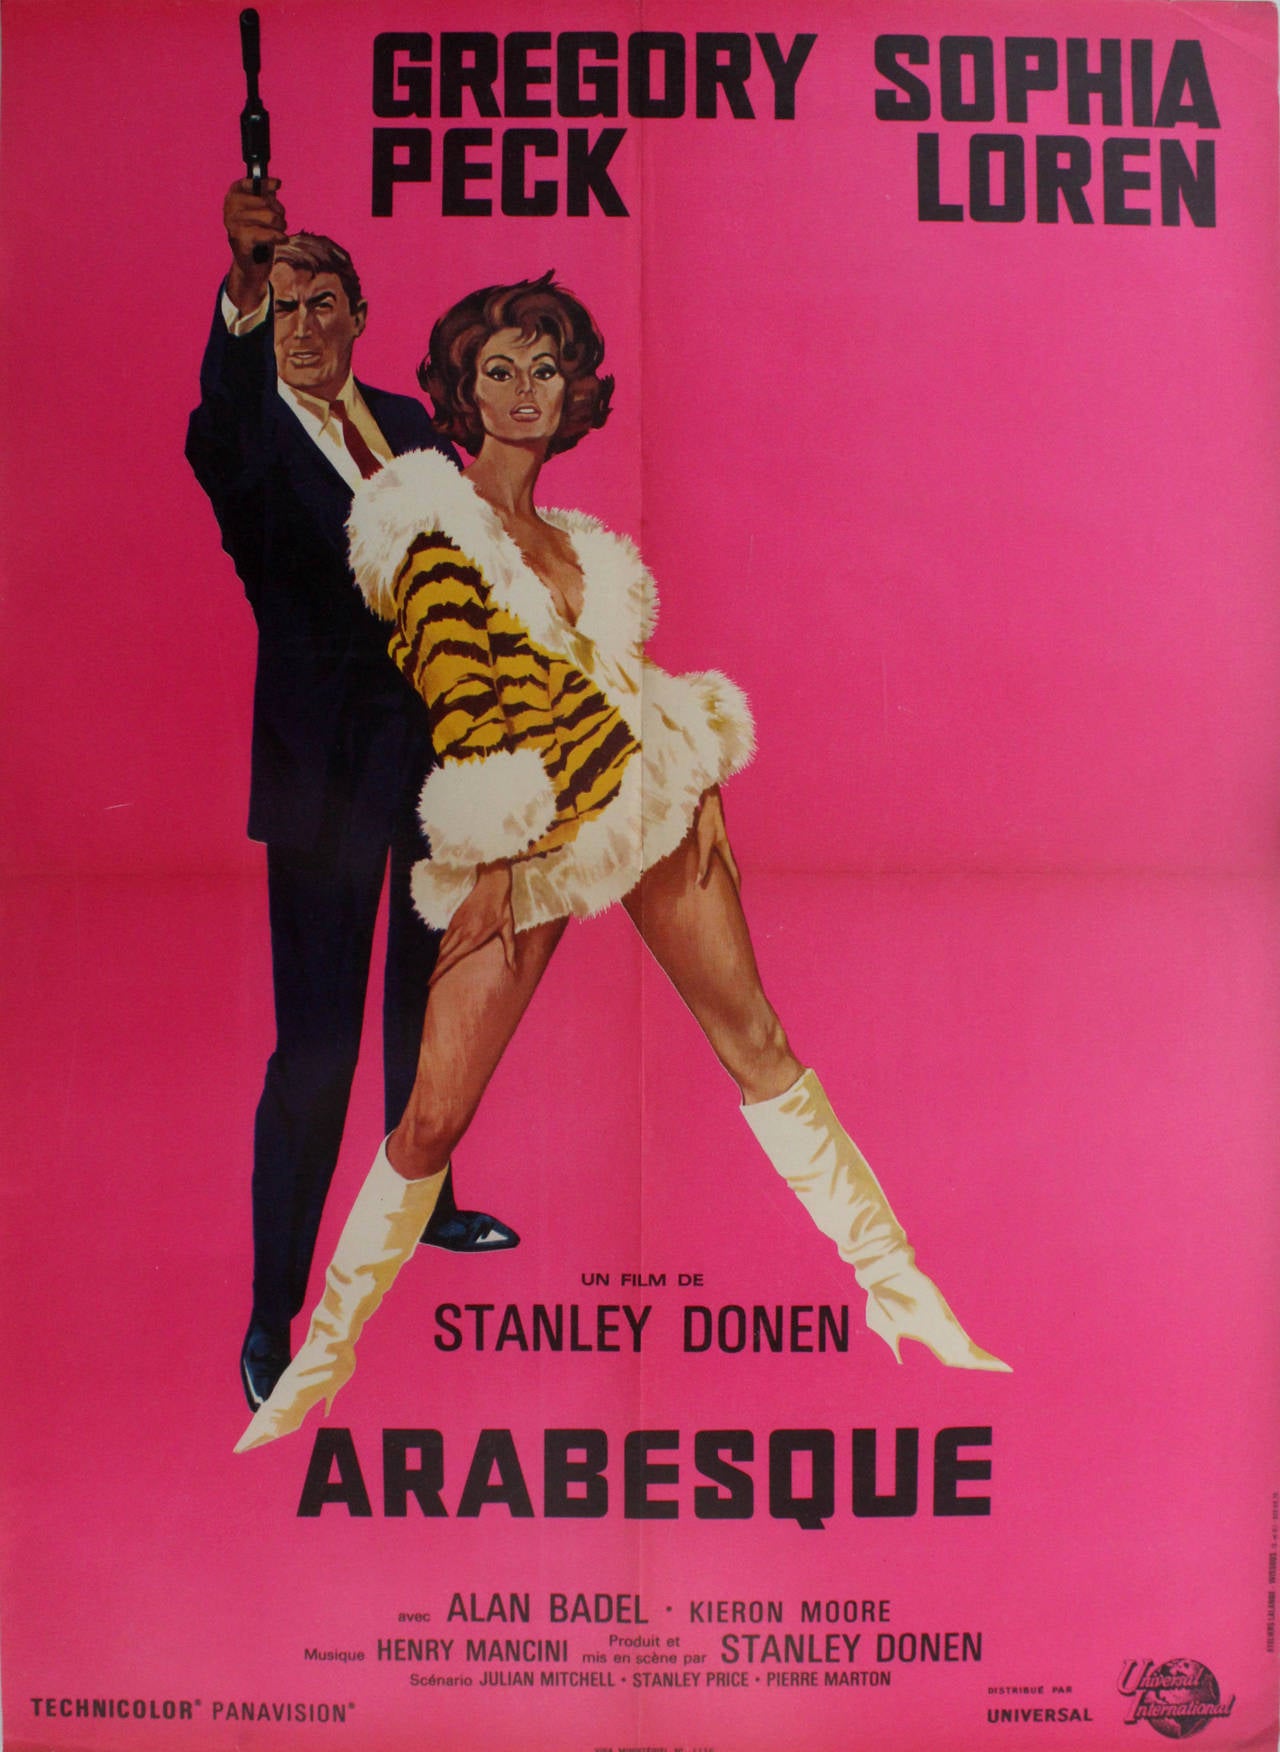 Unknown Print - Original Vintage Movie Poster For Arabesque Starring Gregory Peck & Sophia Loren